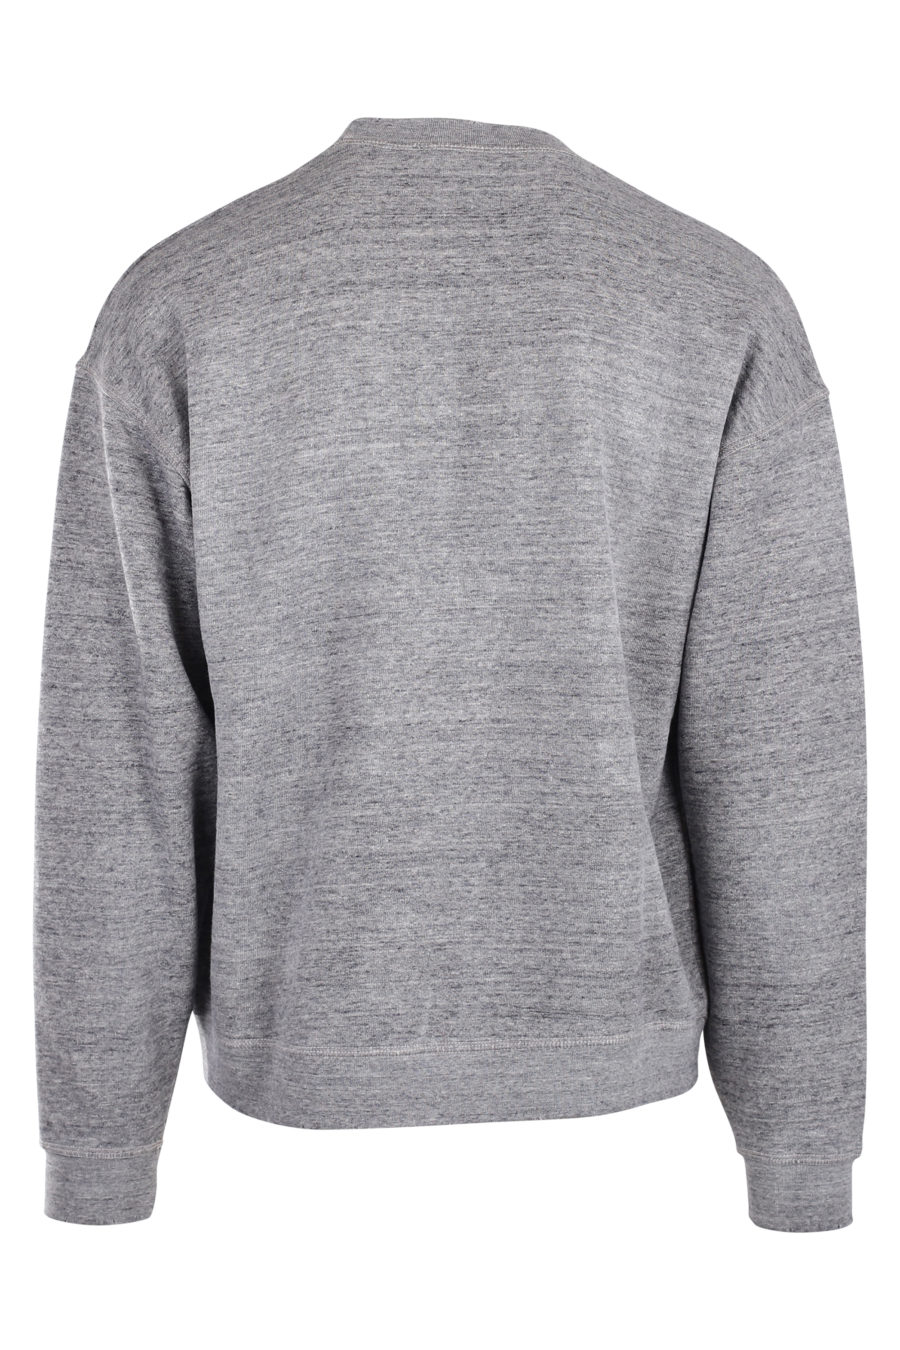 Grey sweatshirt with "phys ed 64" logo black - IMG 9951